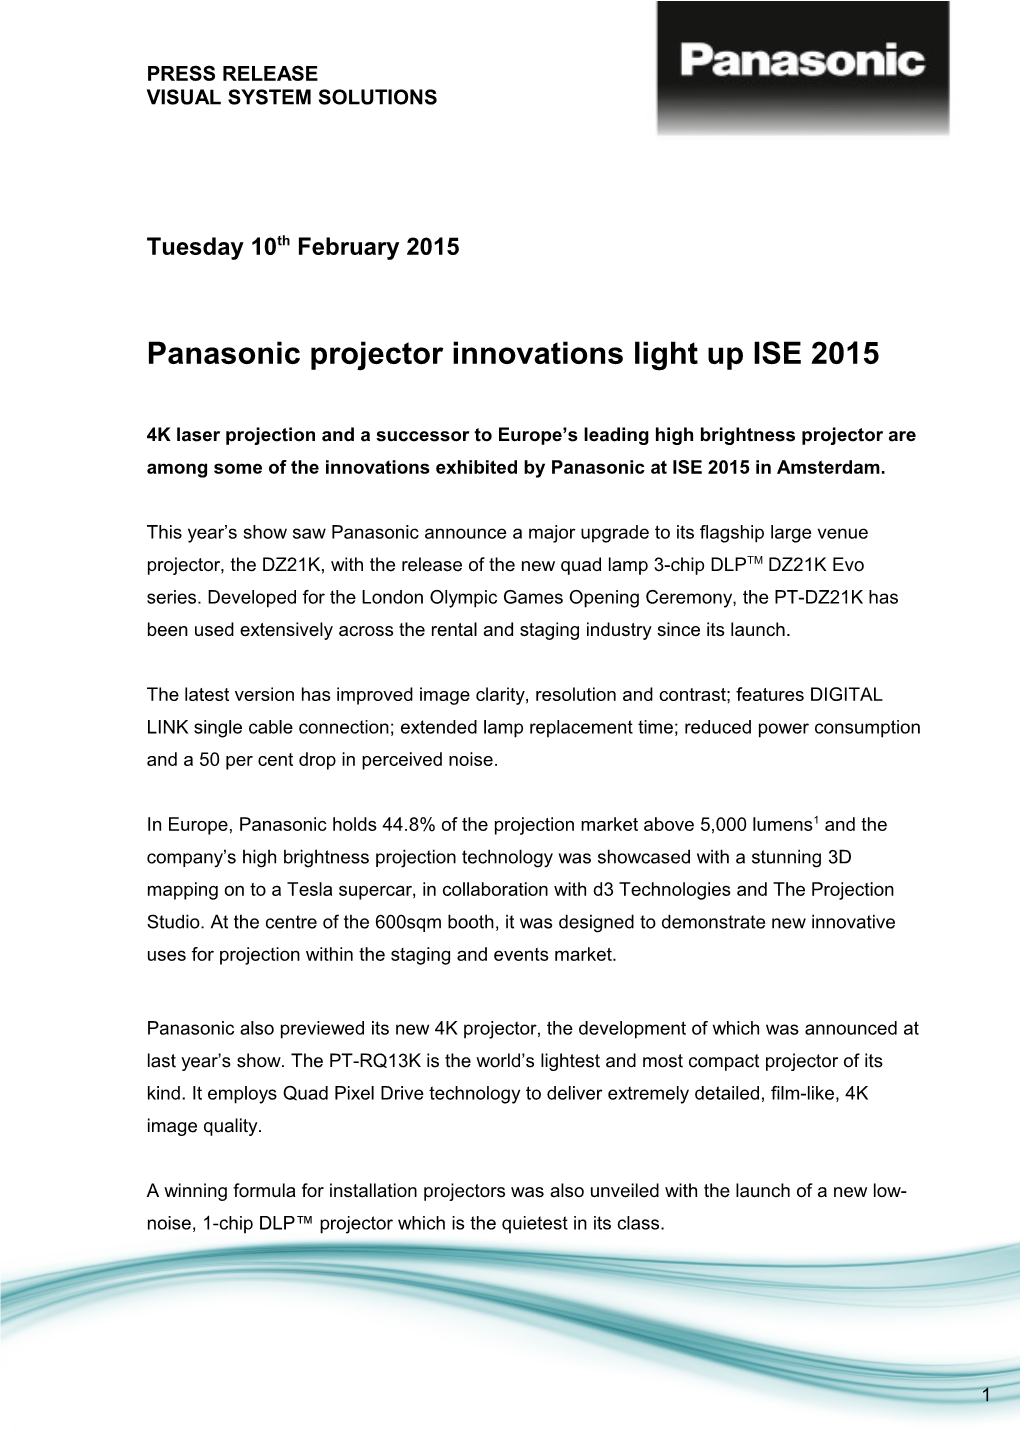 Panasonic Projector Innovations Light up ISE 2015